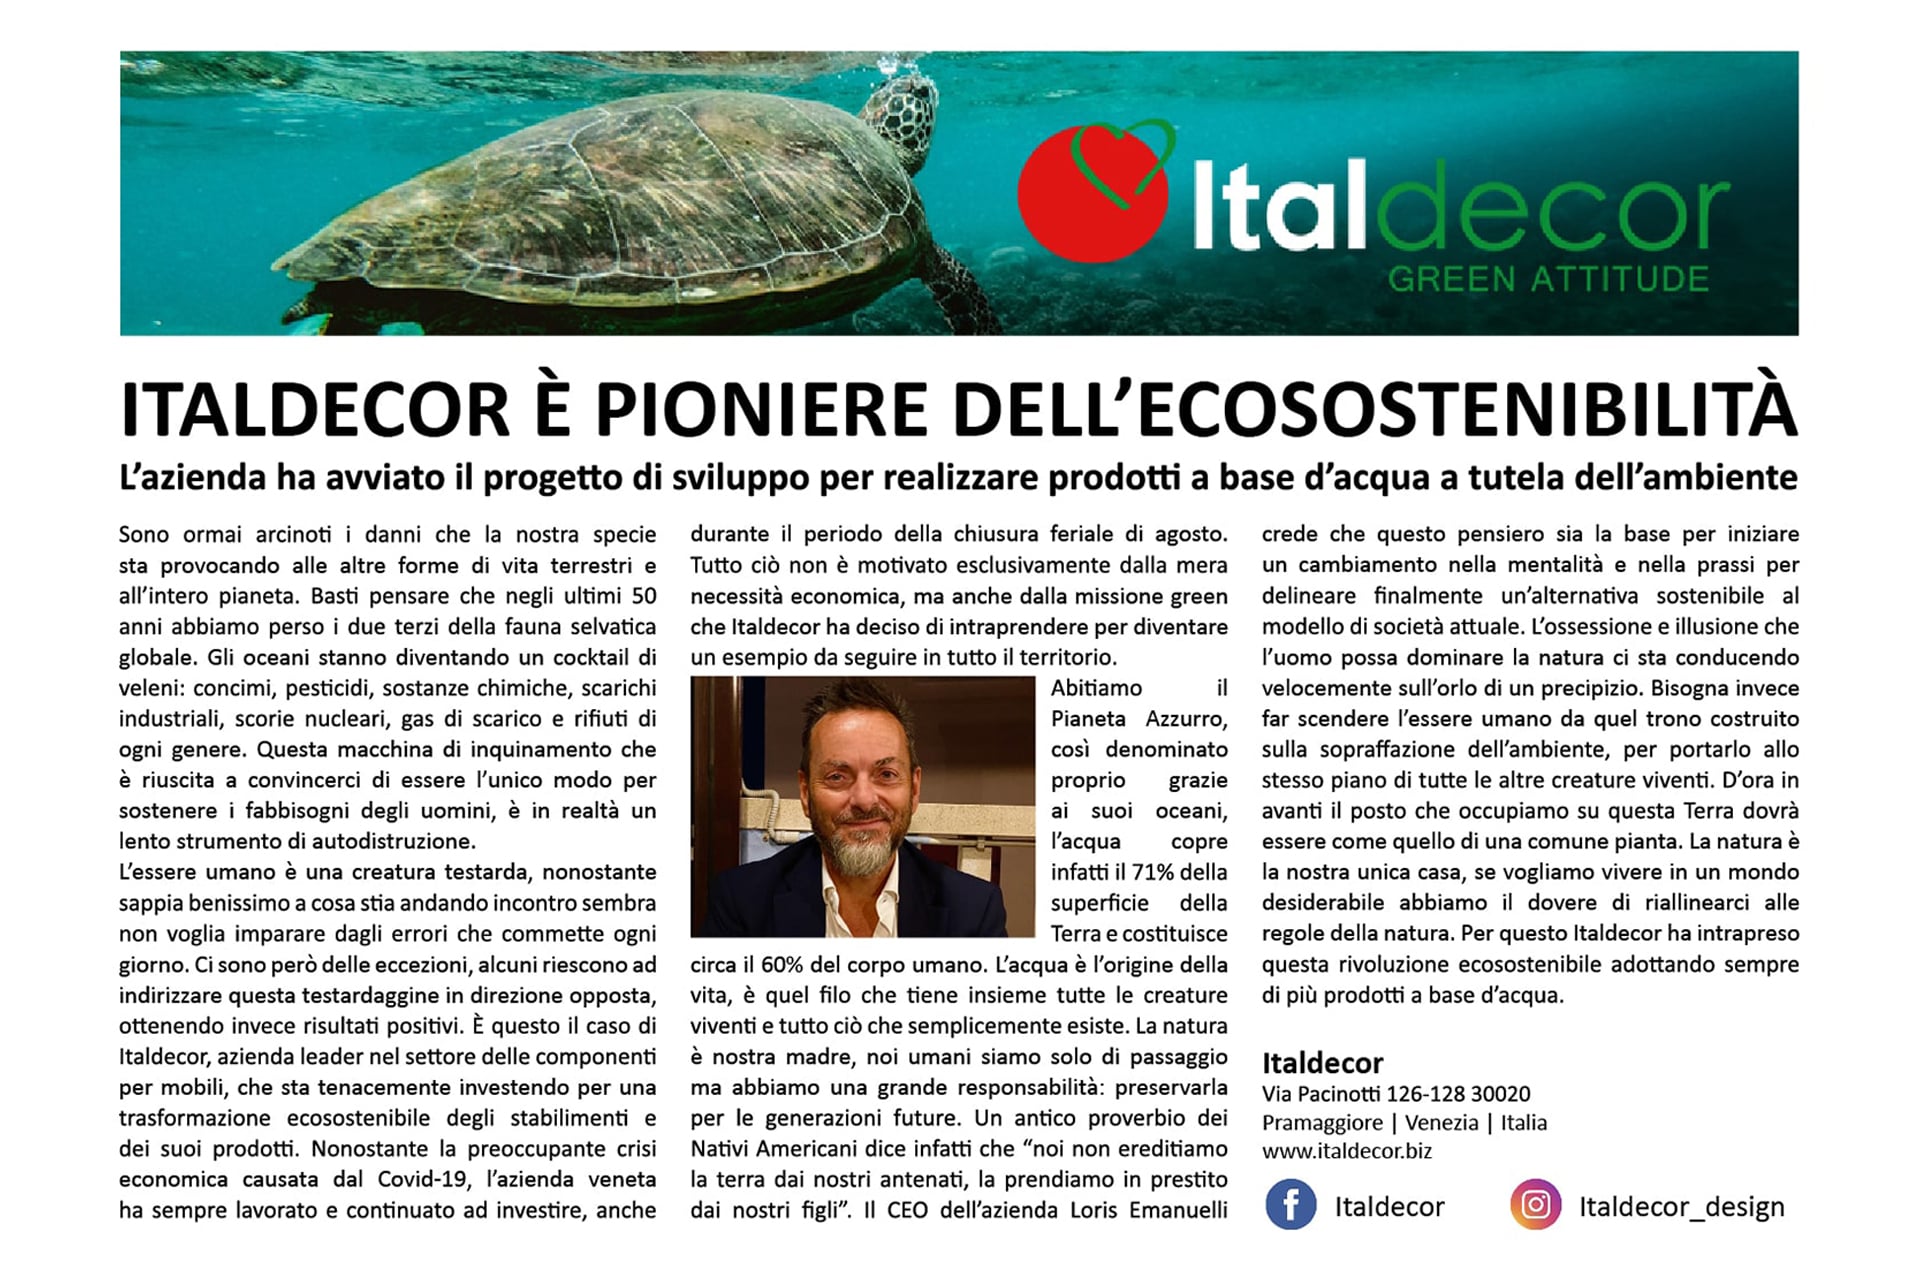 Italdecor venetia communication press advertorial